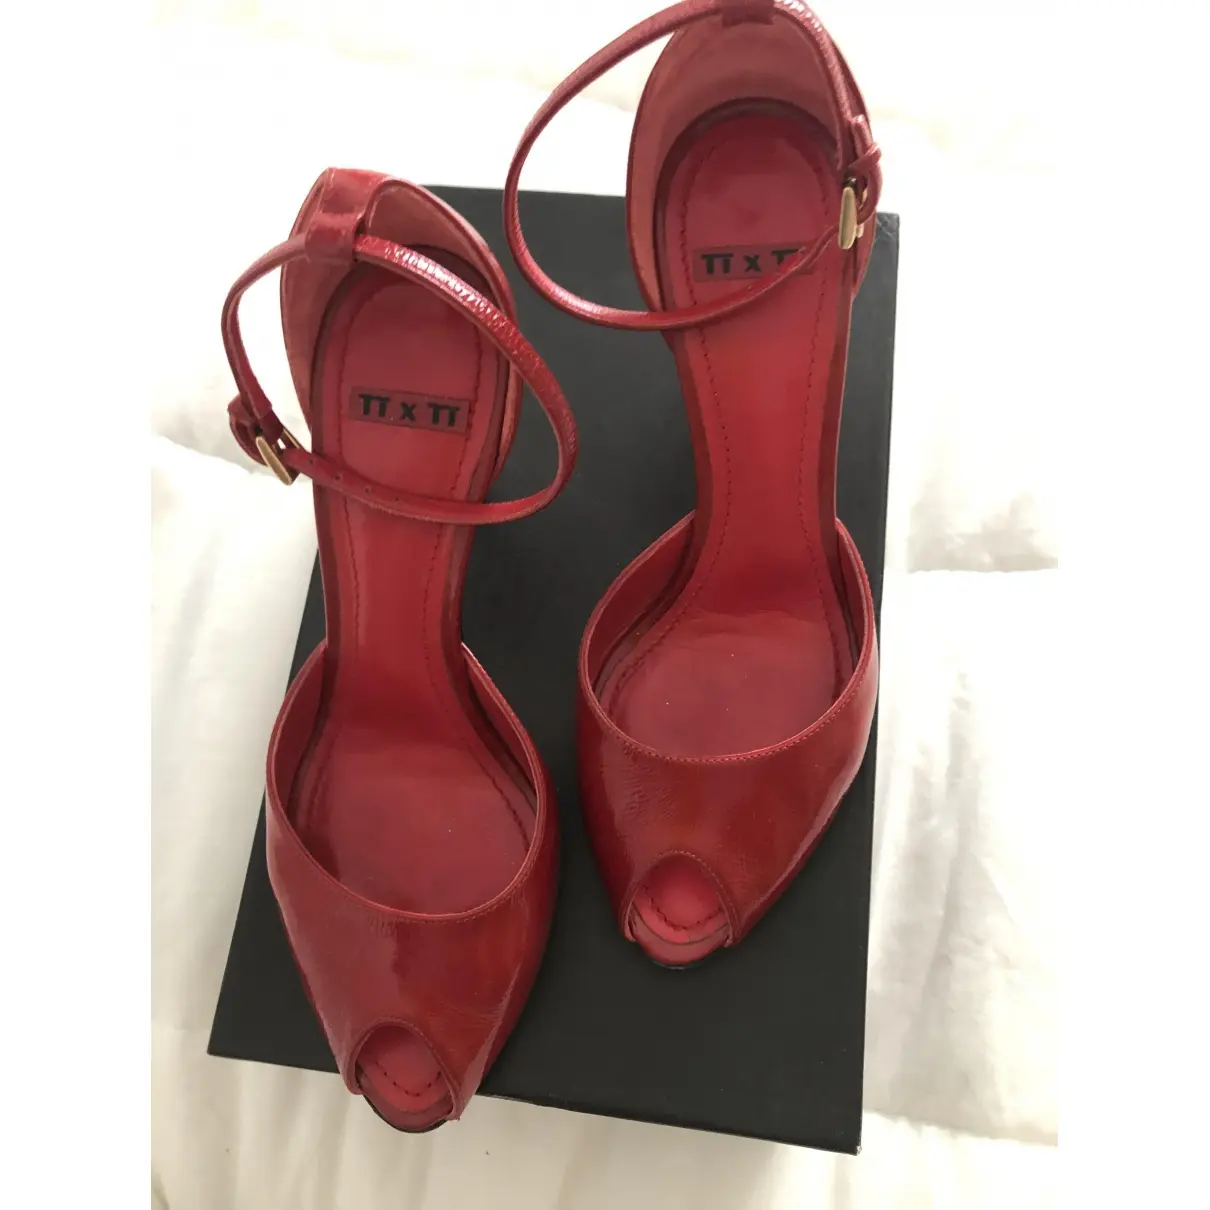 Buy Titti Dell'Acqua Patent leather heels online